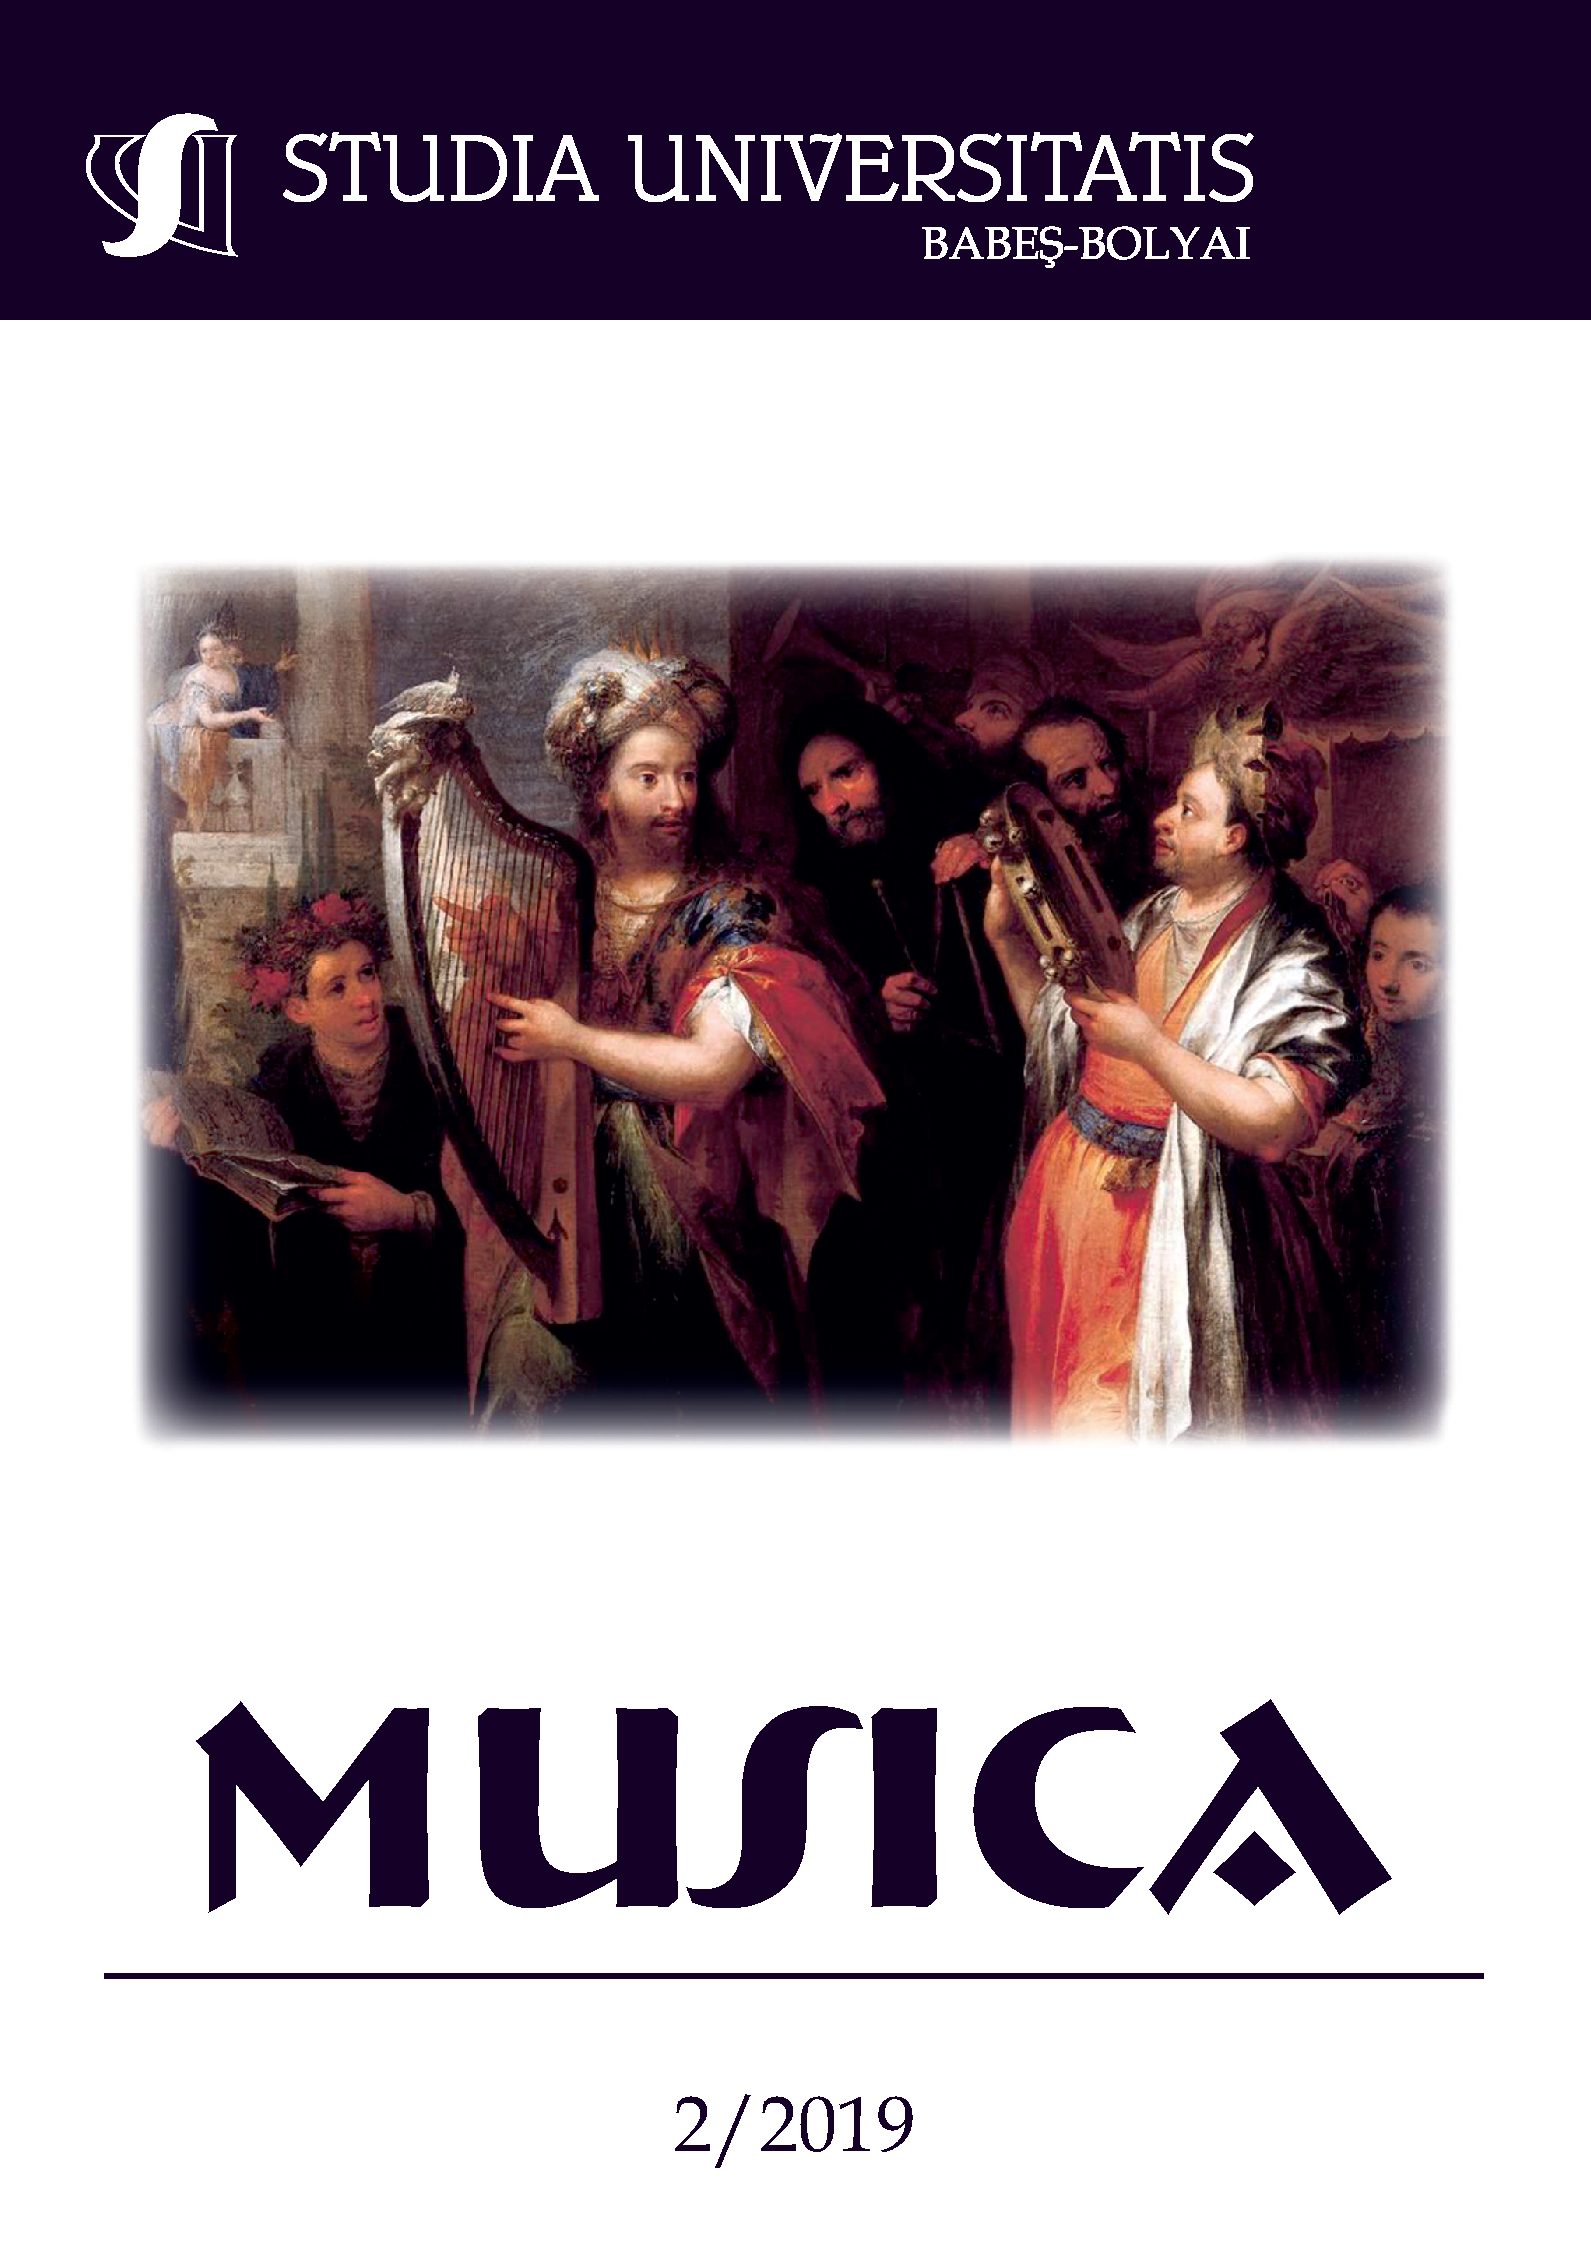 STUDIA UBB MUSICA, Volume 64 (LXIV), No. 2, December 2019